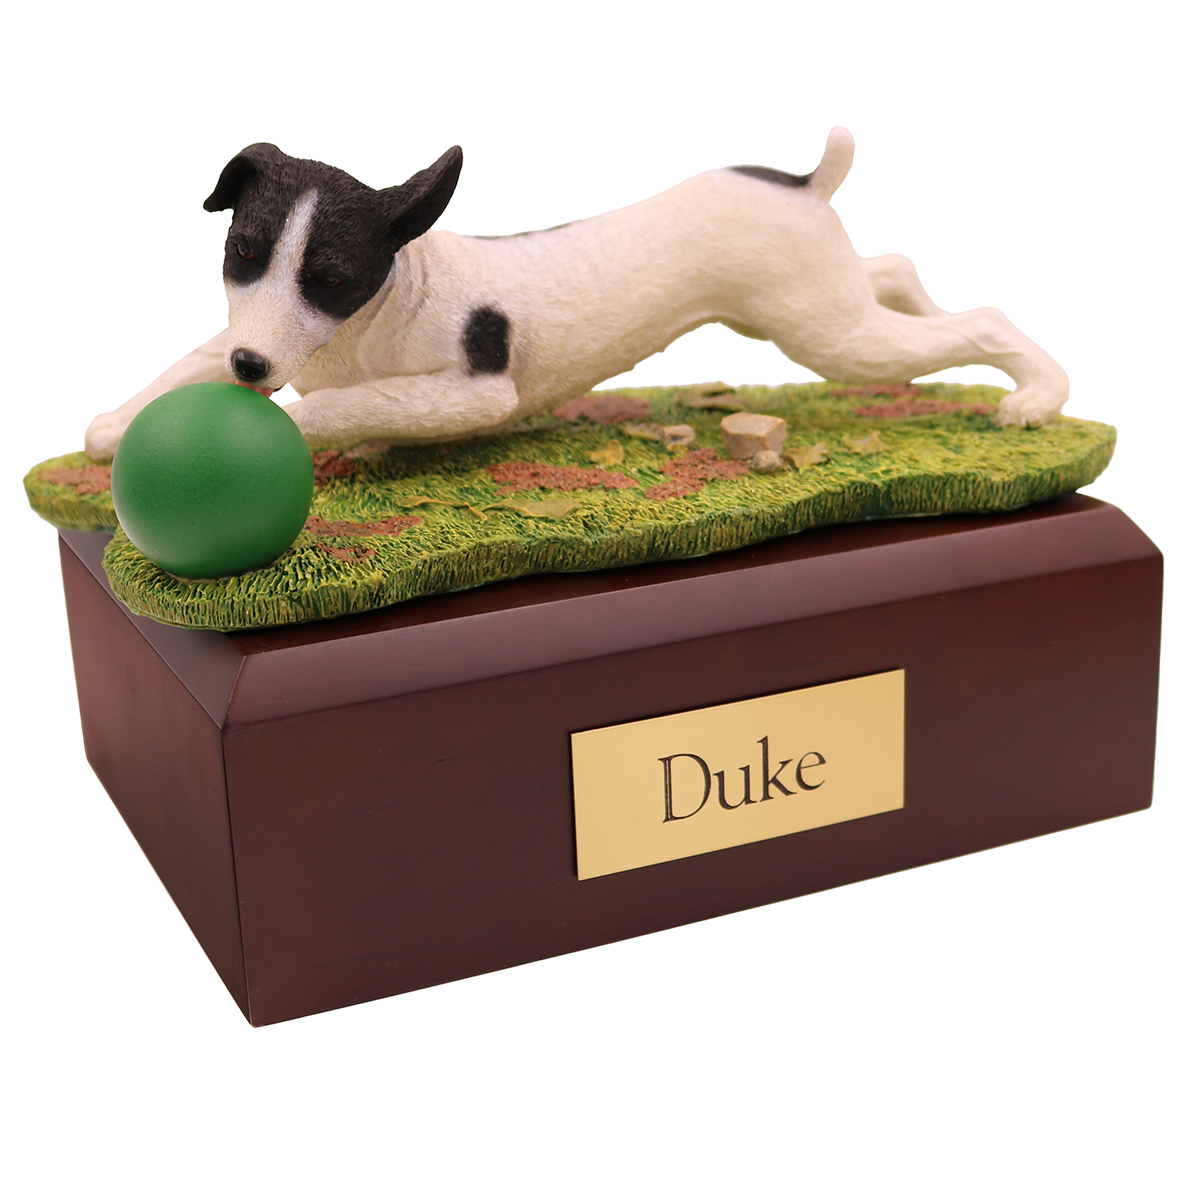 Jack Russel Terrier, Black/White - Figurine Urn